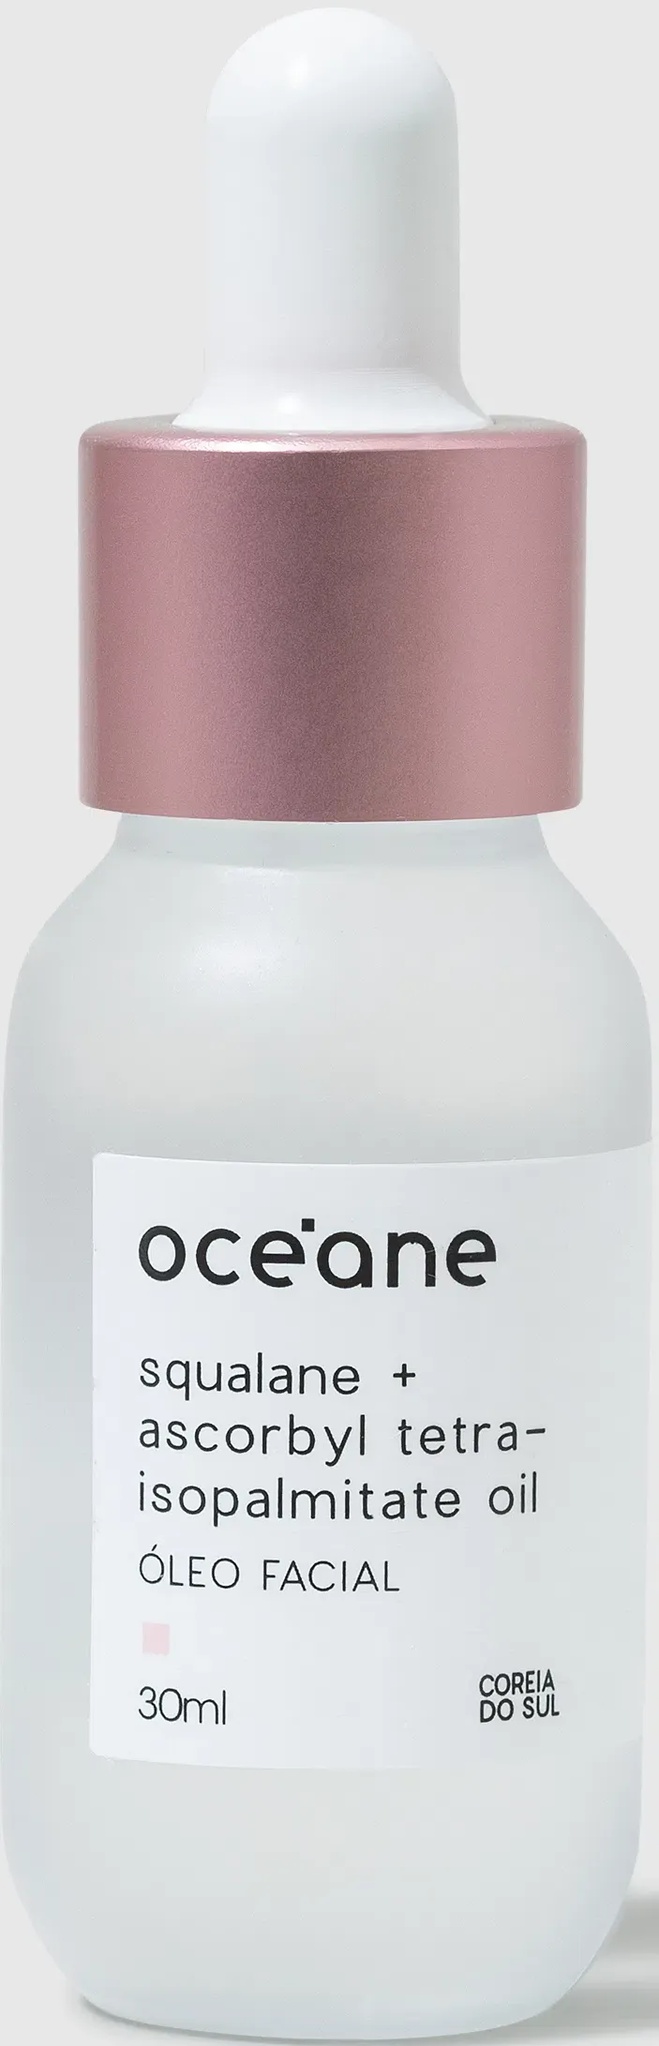 Oceane Squalane + Ascorbil Tetraisopalmitate Oil